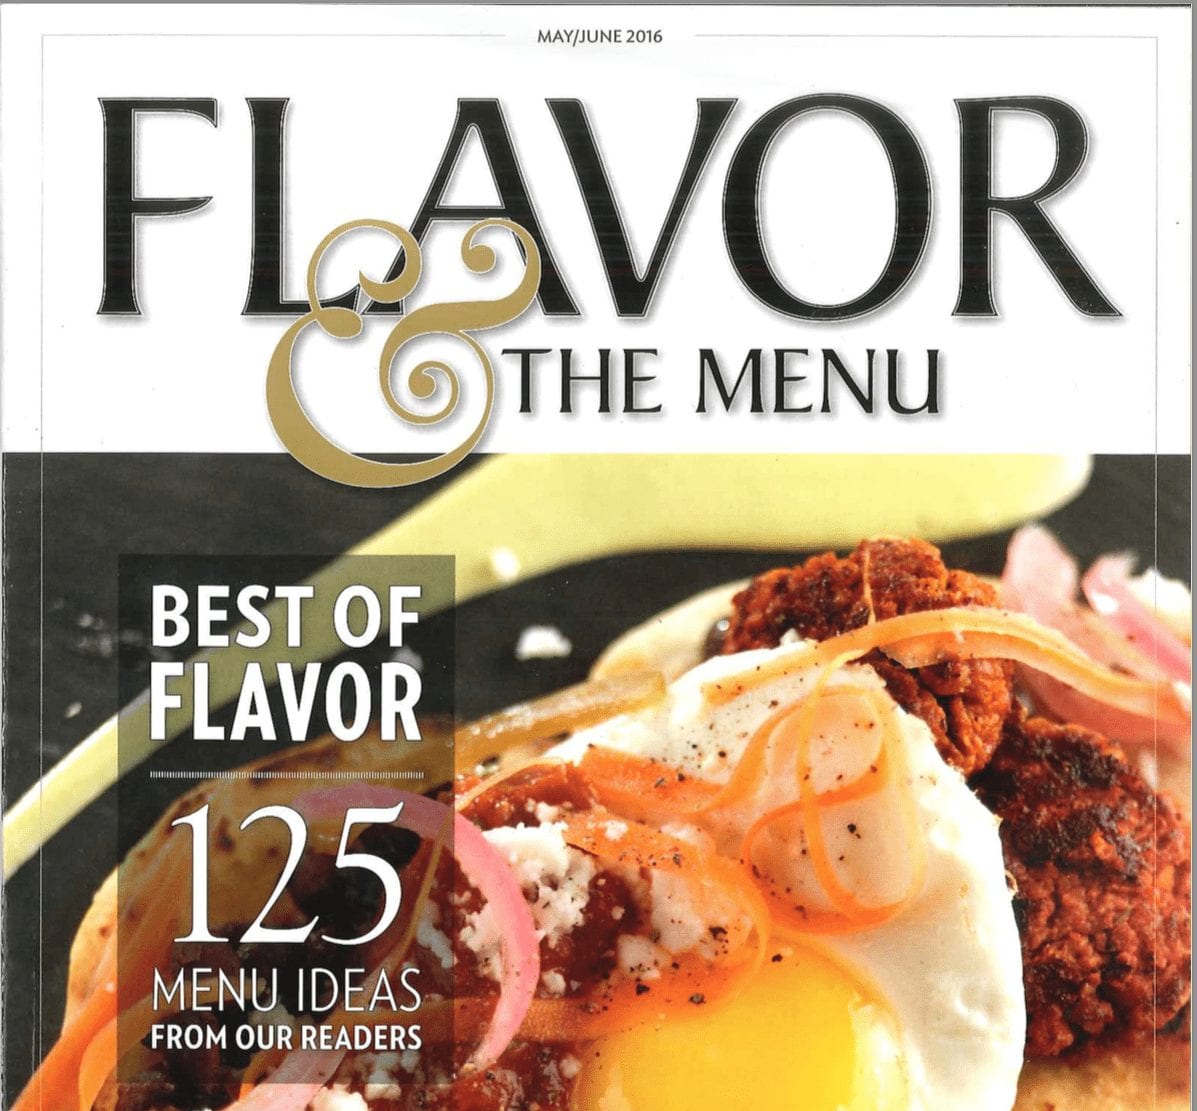 Flavor & The Menu magazine cover.